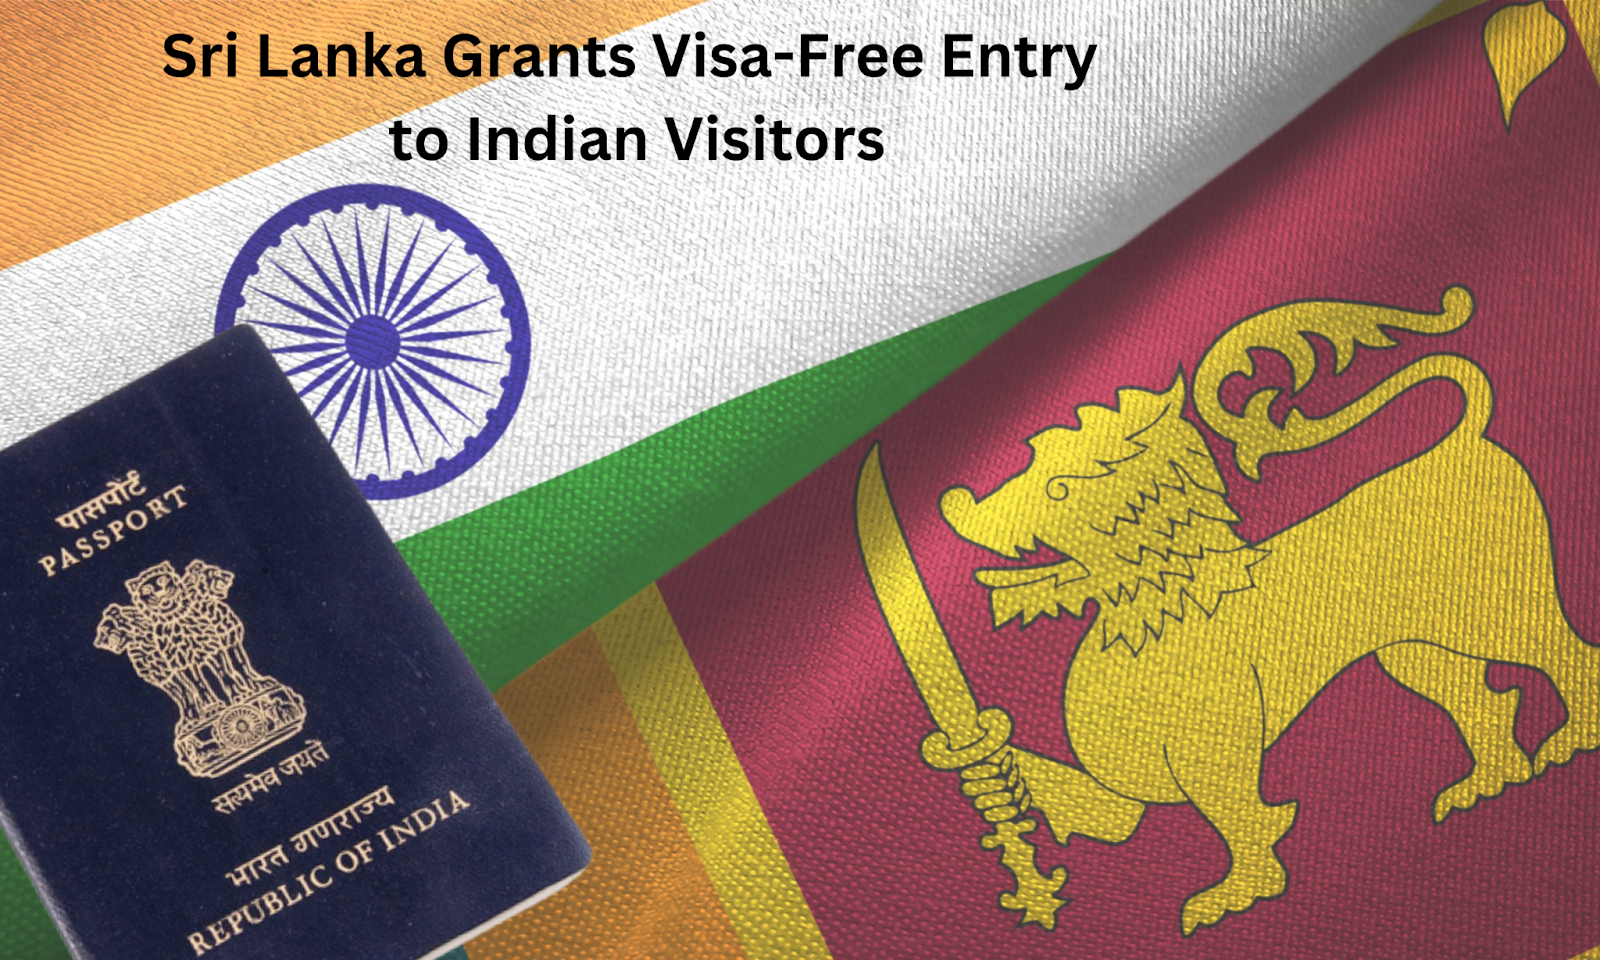 Sri Lanka Grants Visa-Free Entry to Indian Visitors